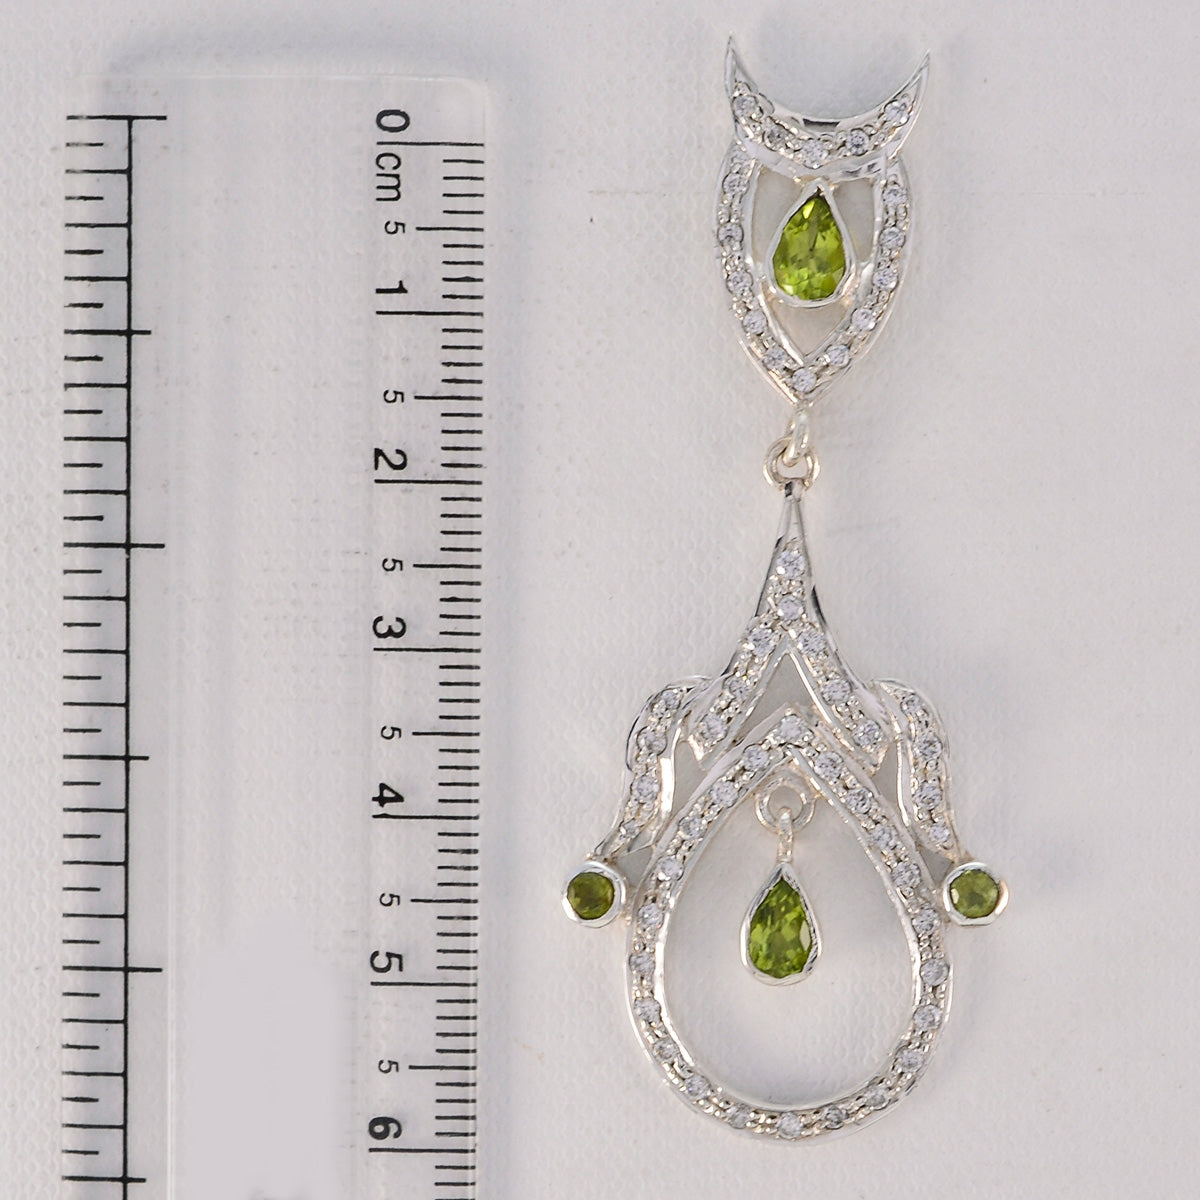 Riyo Foxy 925 Sterling Silber Ohrring für Schwester Peridot Ohrring Lünettenfassung Grüner Ohrring Jhumka Ohrring